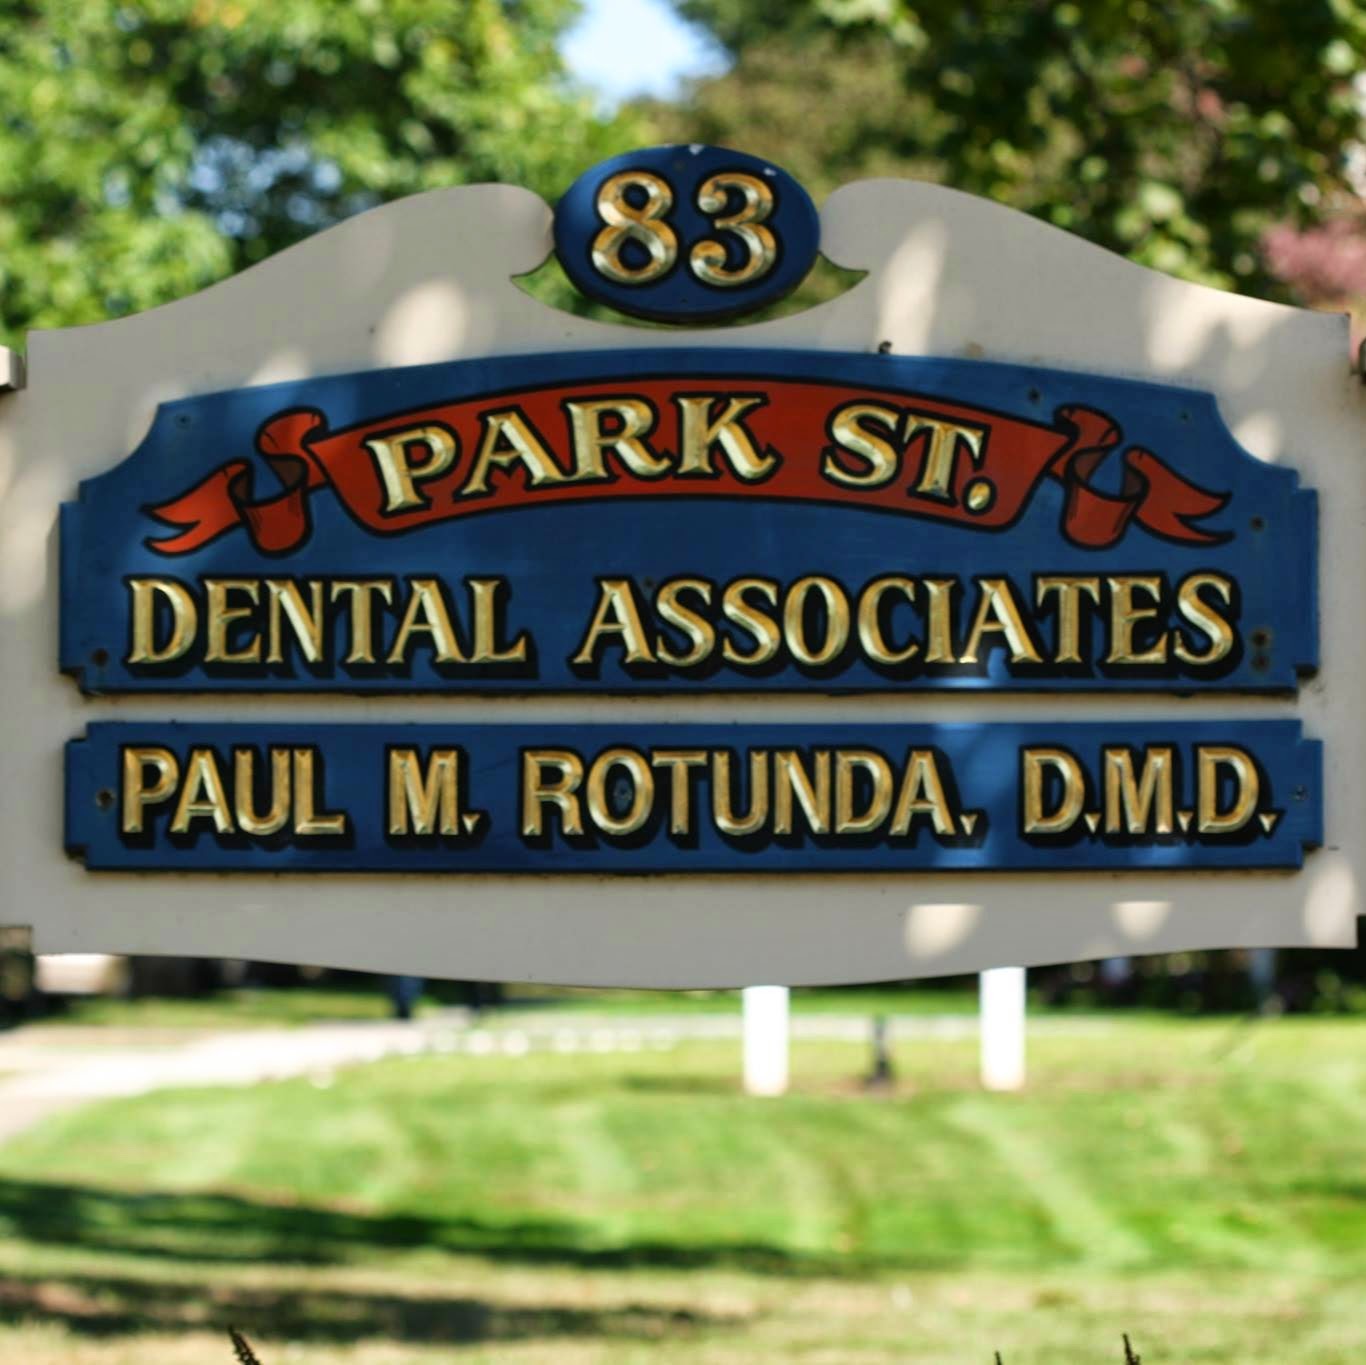 Photo of Park Street Dental Associates: Rotunda Paul M DMD in Montclair City, New Jersey, United States - 1 Picture of Point of interest, Establishment, Health, Dentist